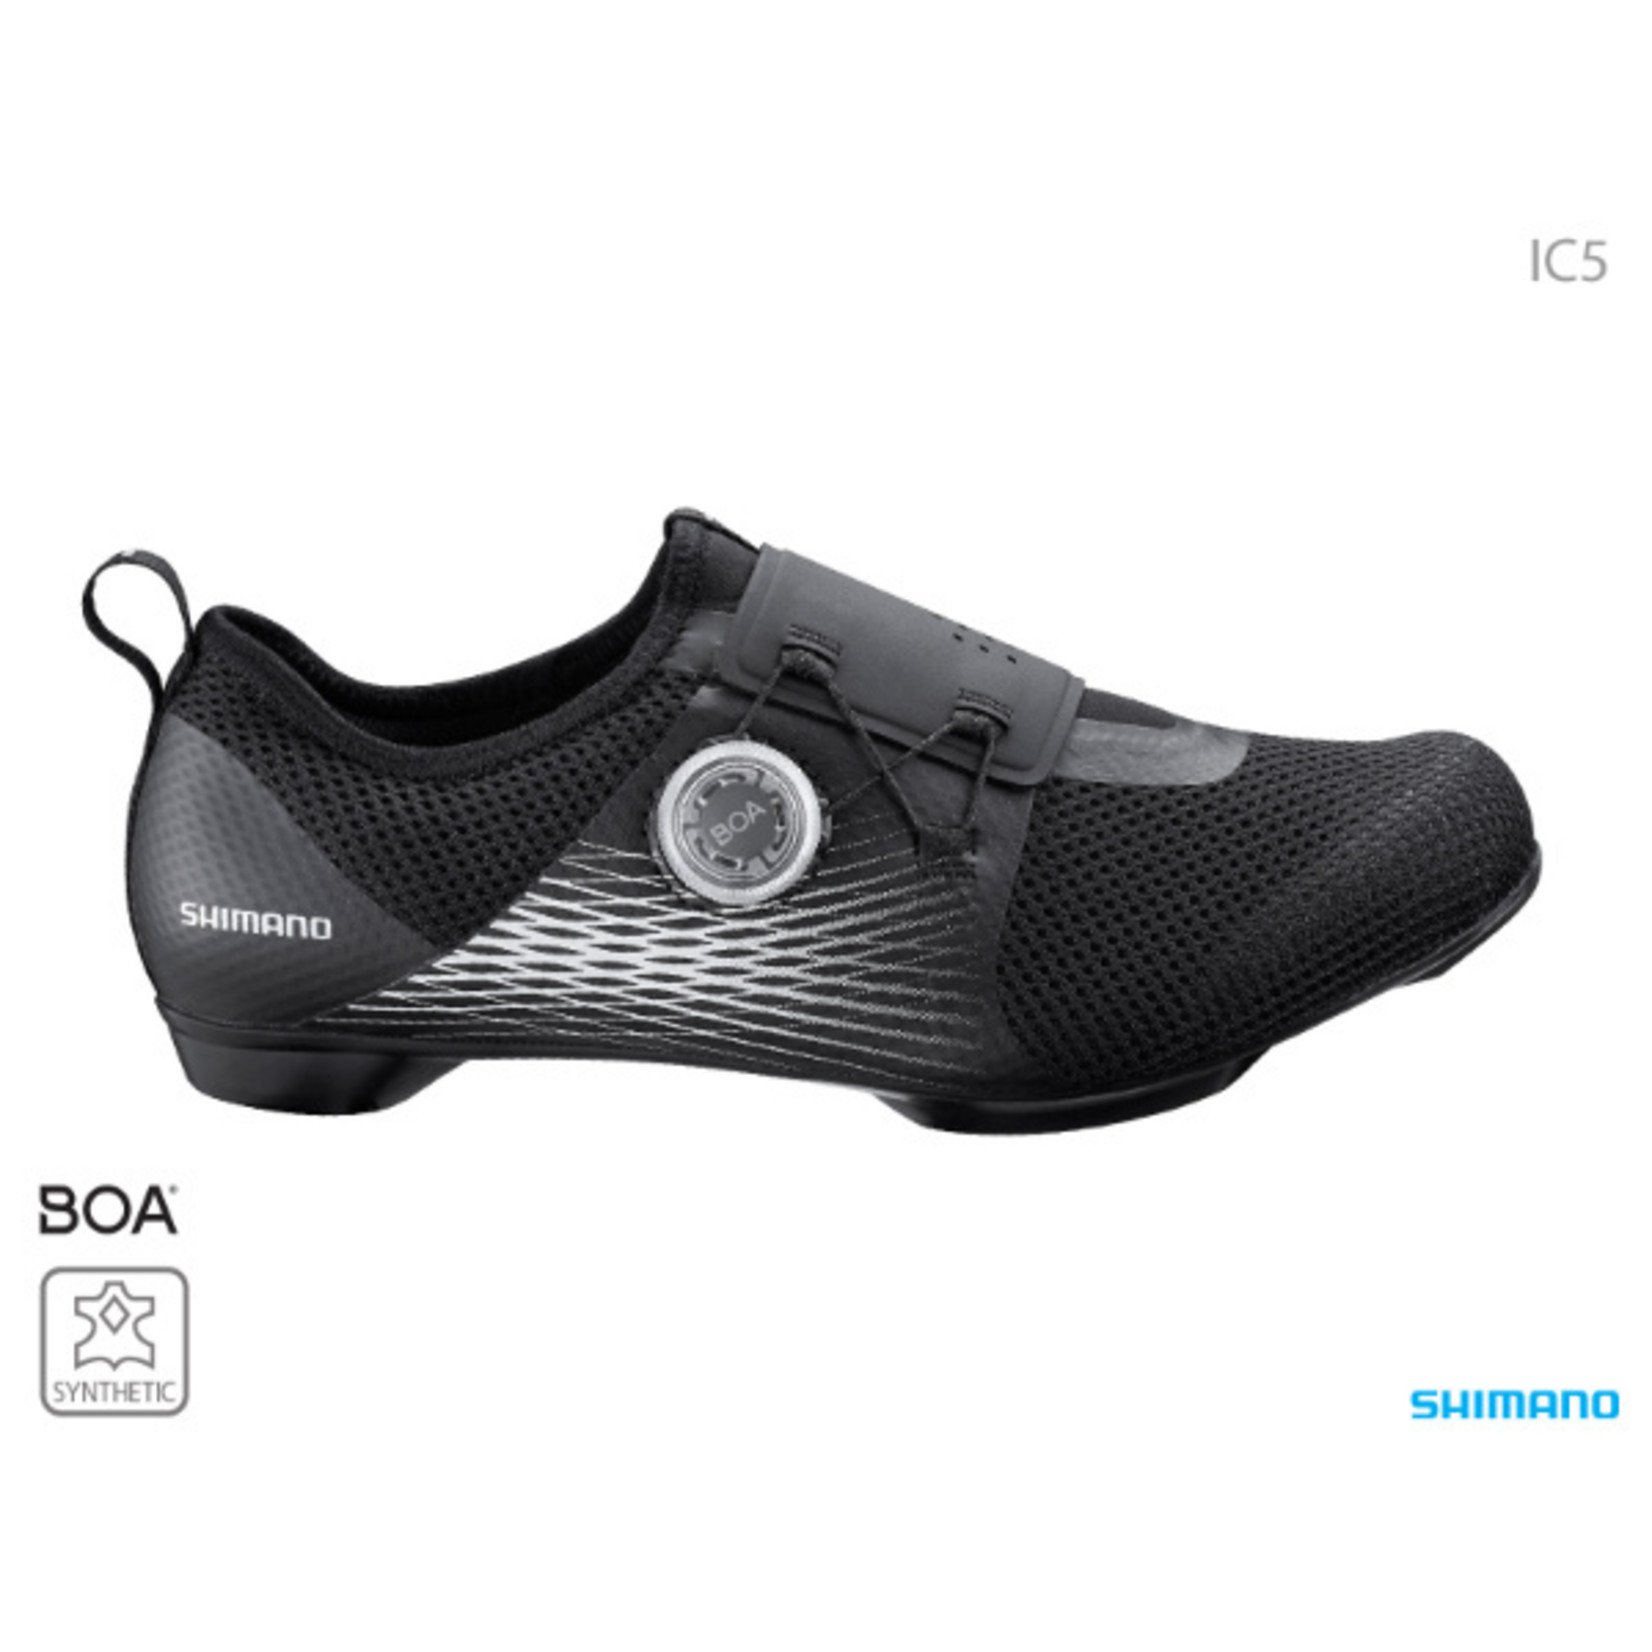 Shimano Shimano SH-IC500 Women's Indoor SPD Spin/Cycling Shoes - Black